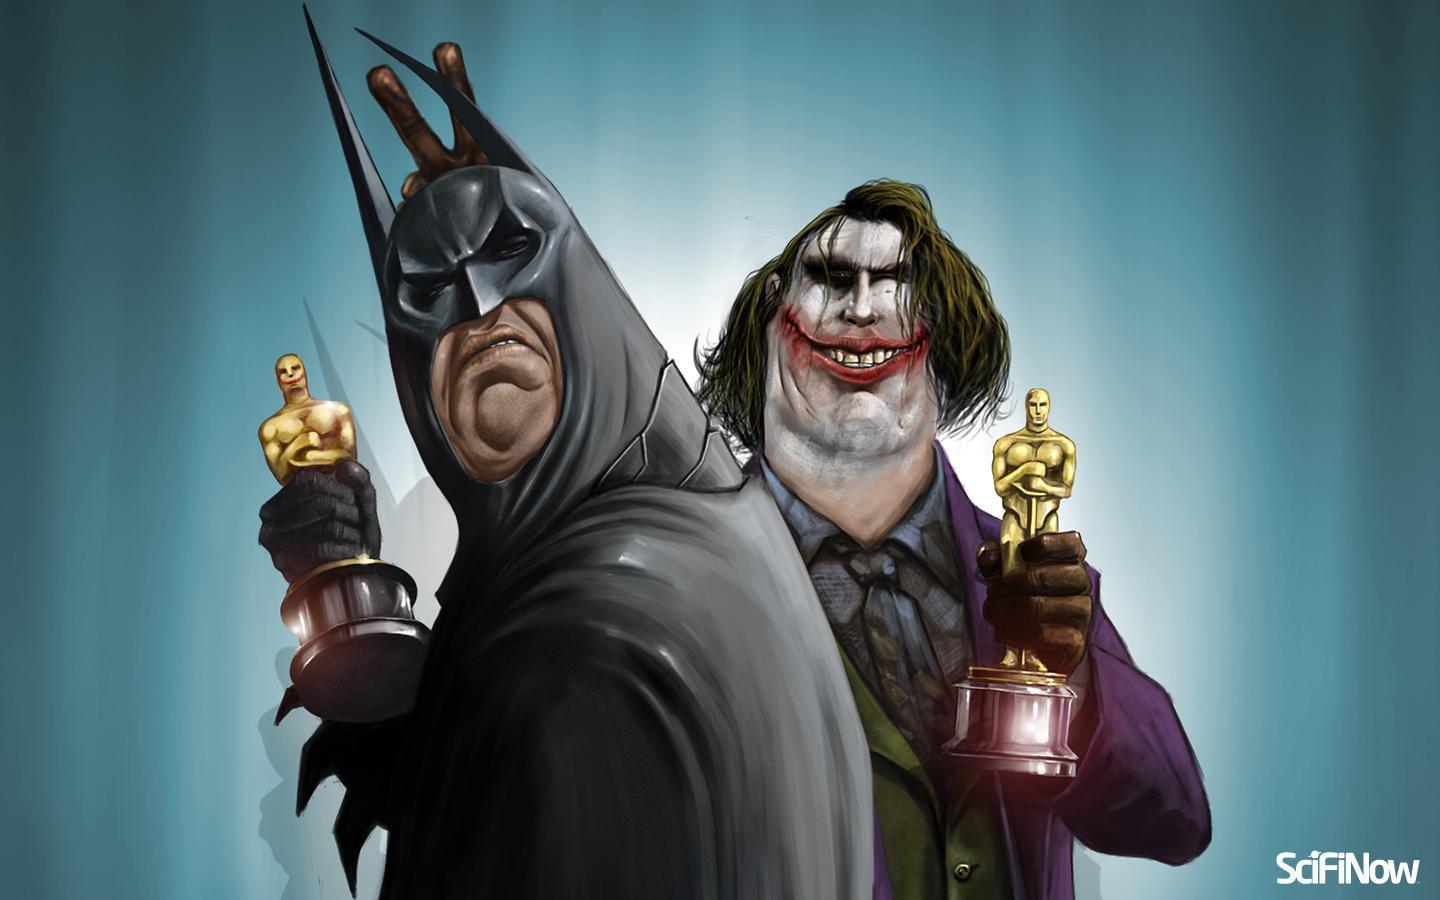 Batman and Joker wallpaper downloads. SciFiNow World&;s Best